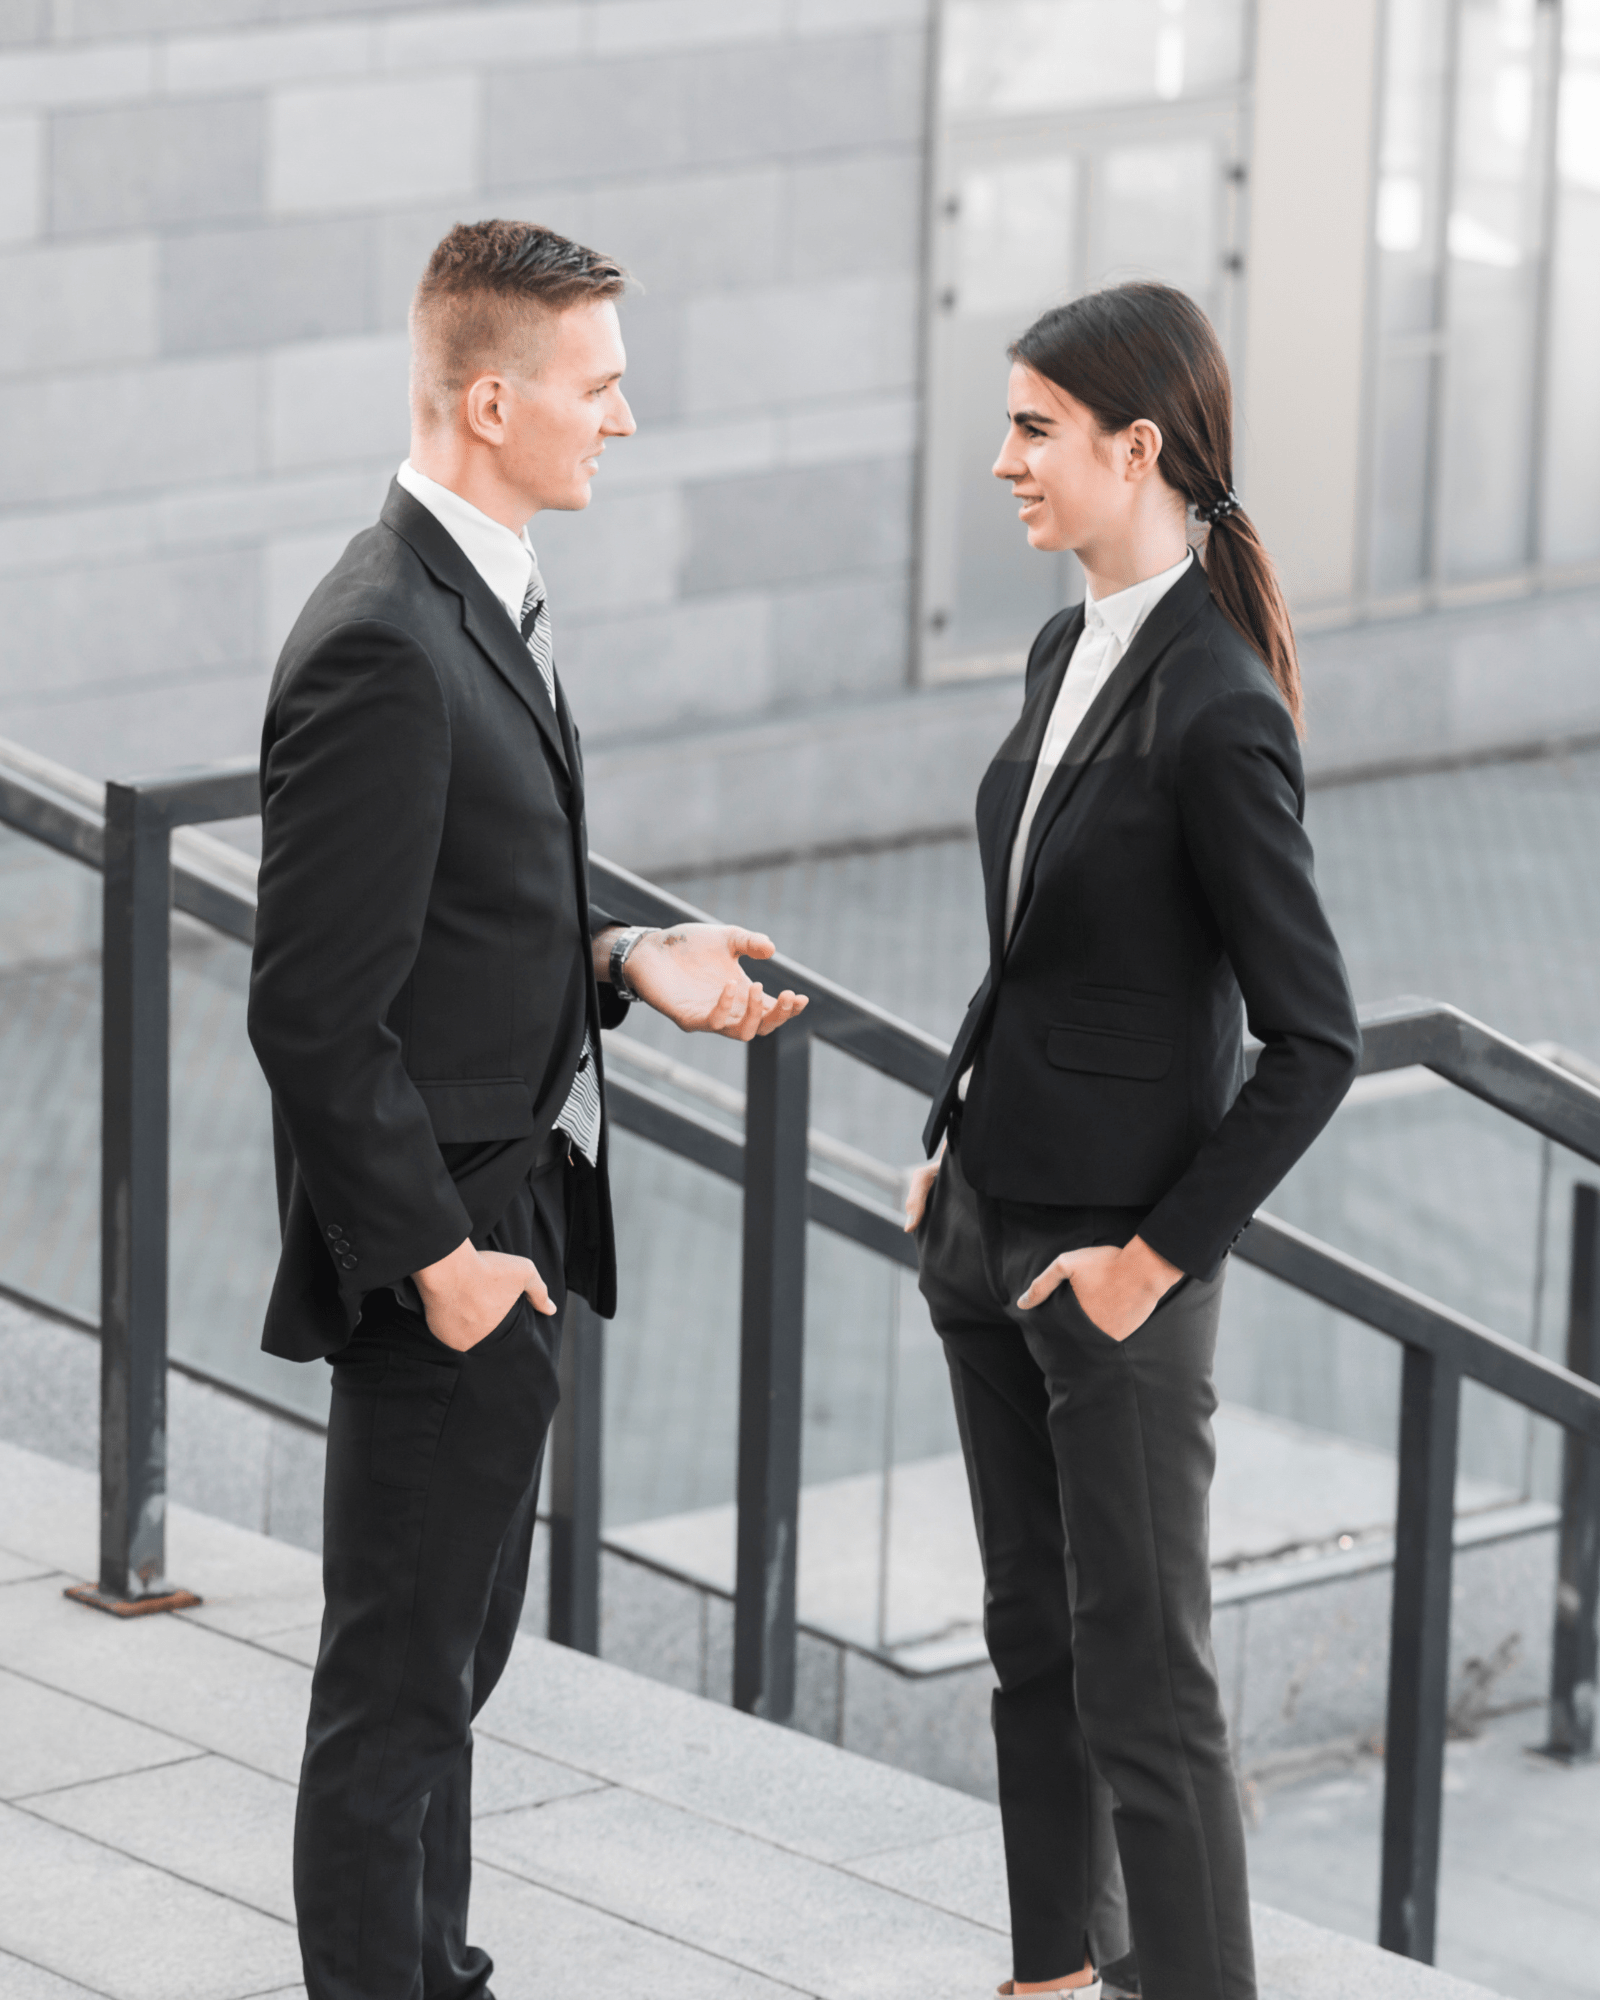 Corporate Uniforms Man & Lady Meeting